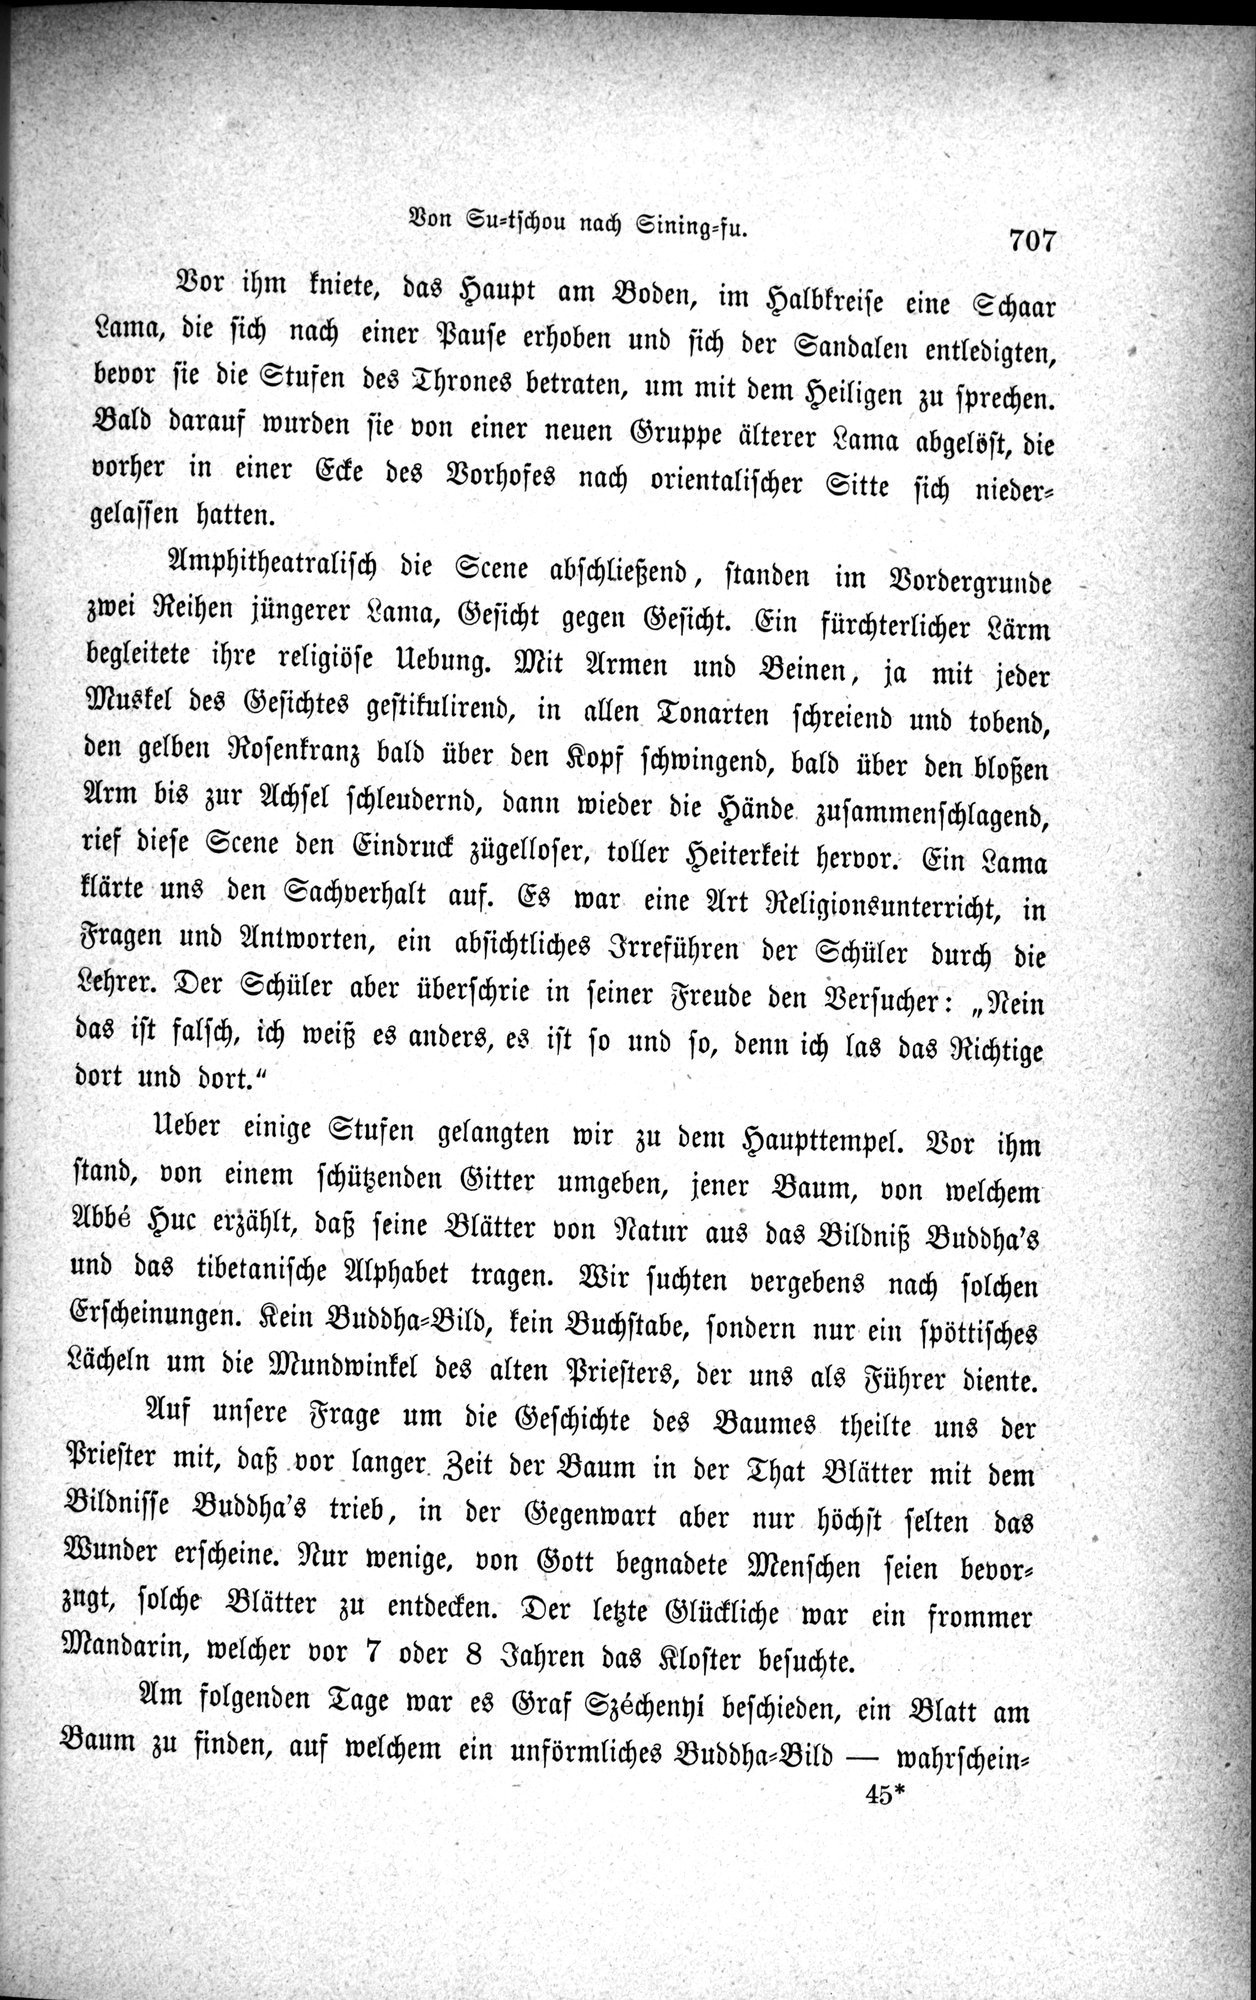 Im fernen Osten : vol.1 / Page 731 (Grayscale High Resolution Image)